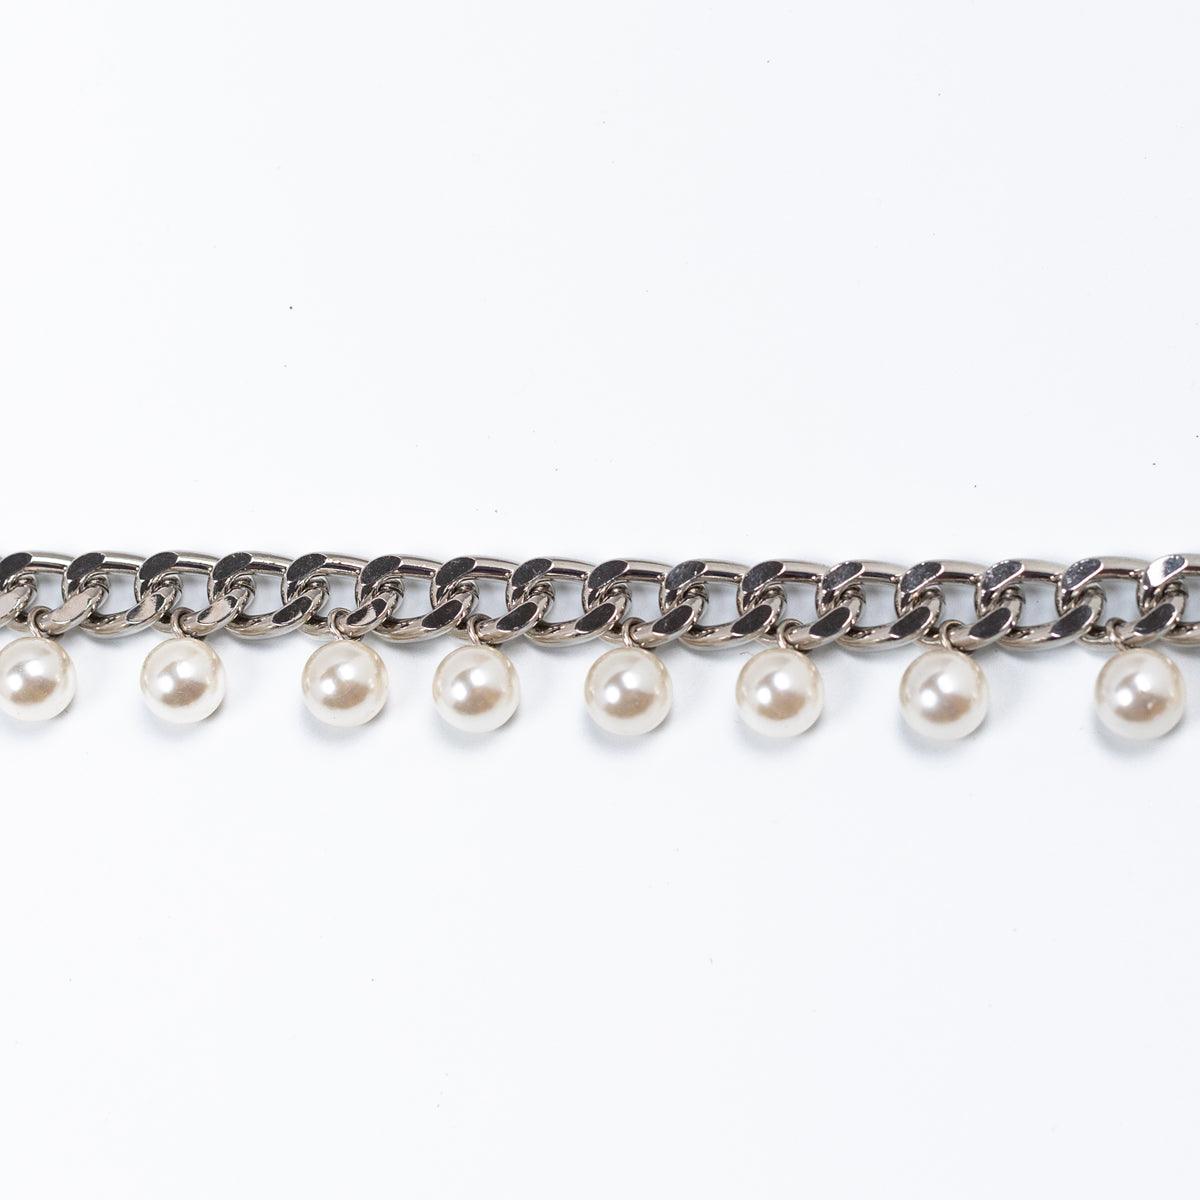 Lant ornamental argintiu cu perle